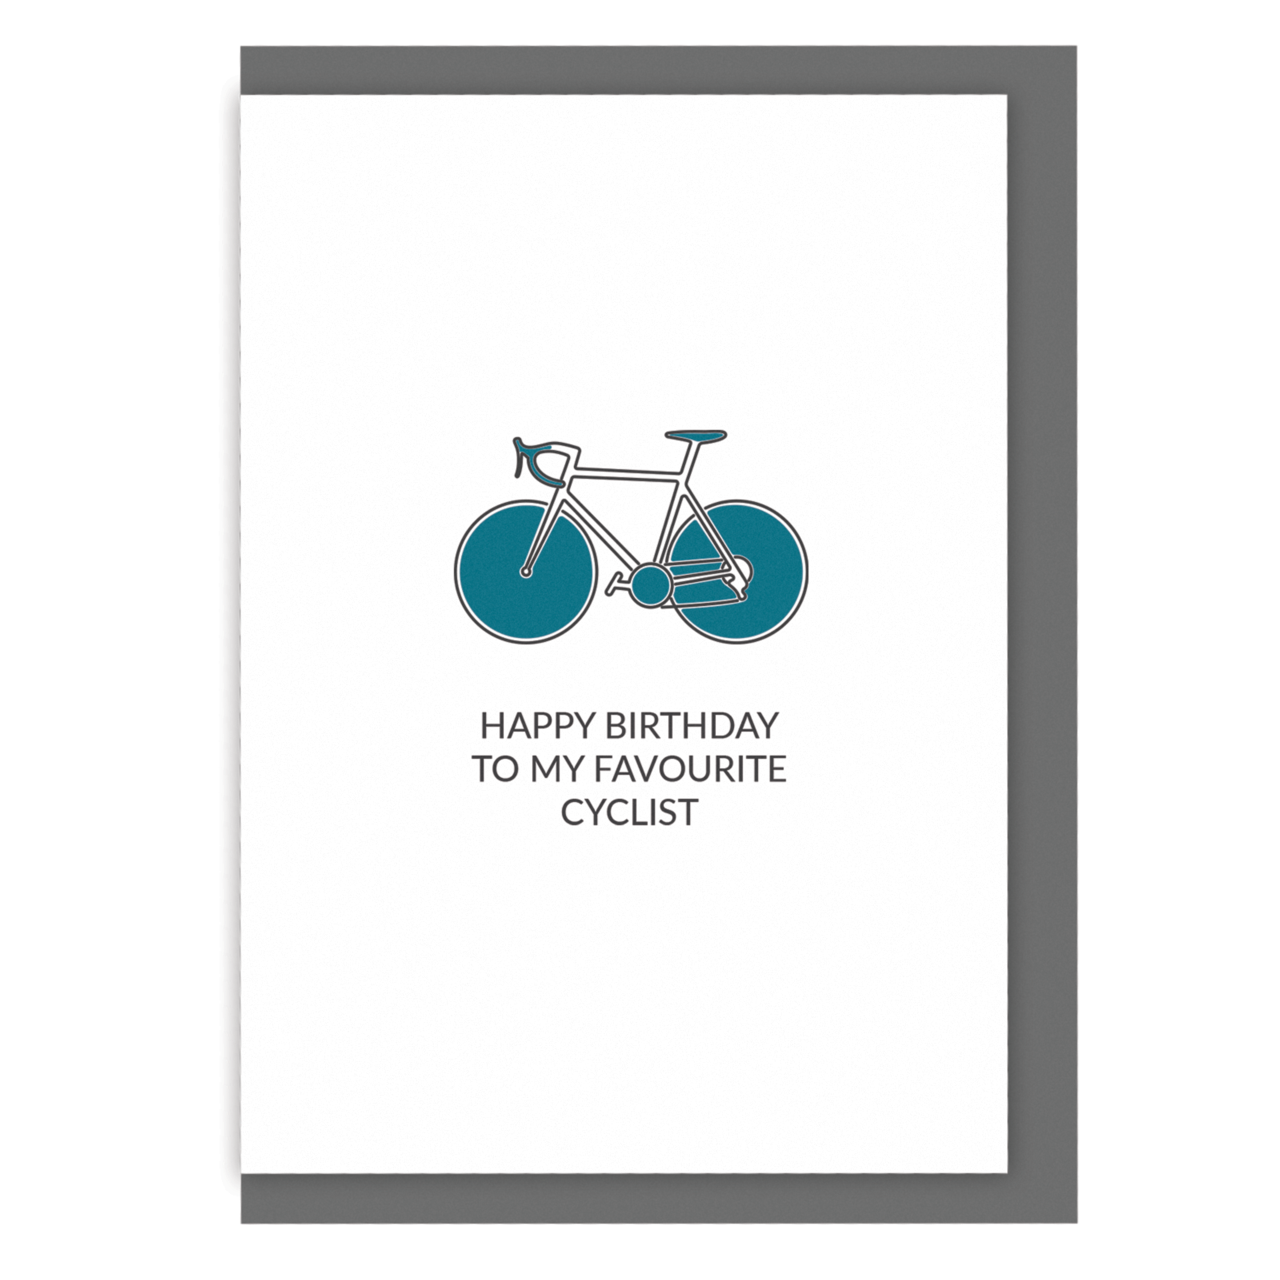 Cycling birthday card happy birthday to my favourite cyclist